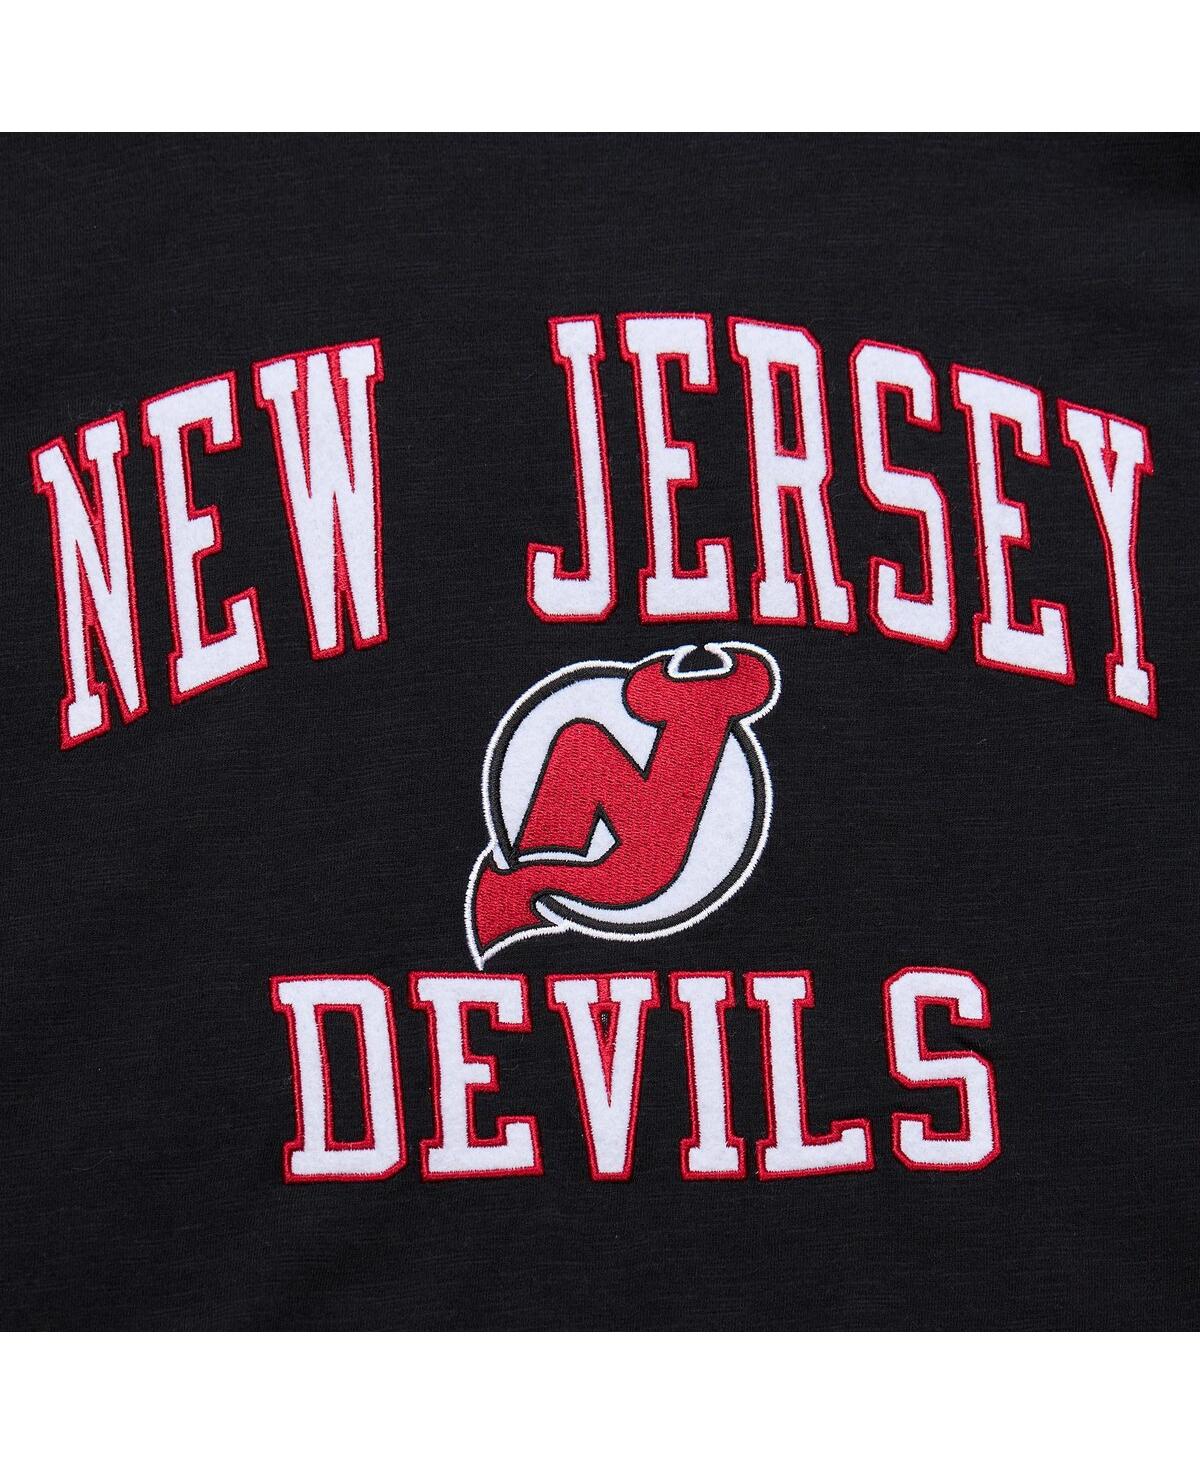 Shop Mitchell & Ness Men's  Black New Jersey Devils Legendary Slub T-shirt